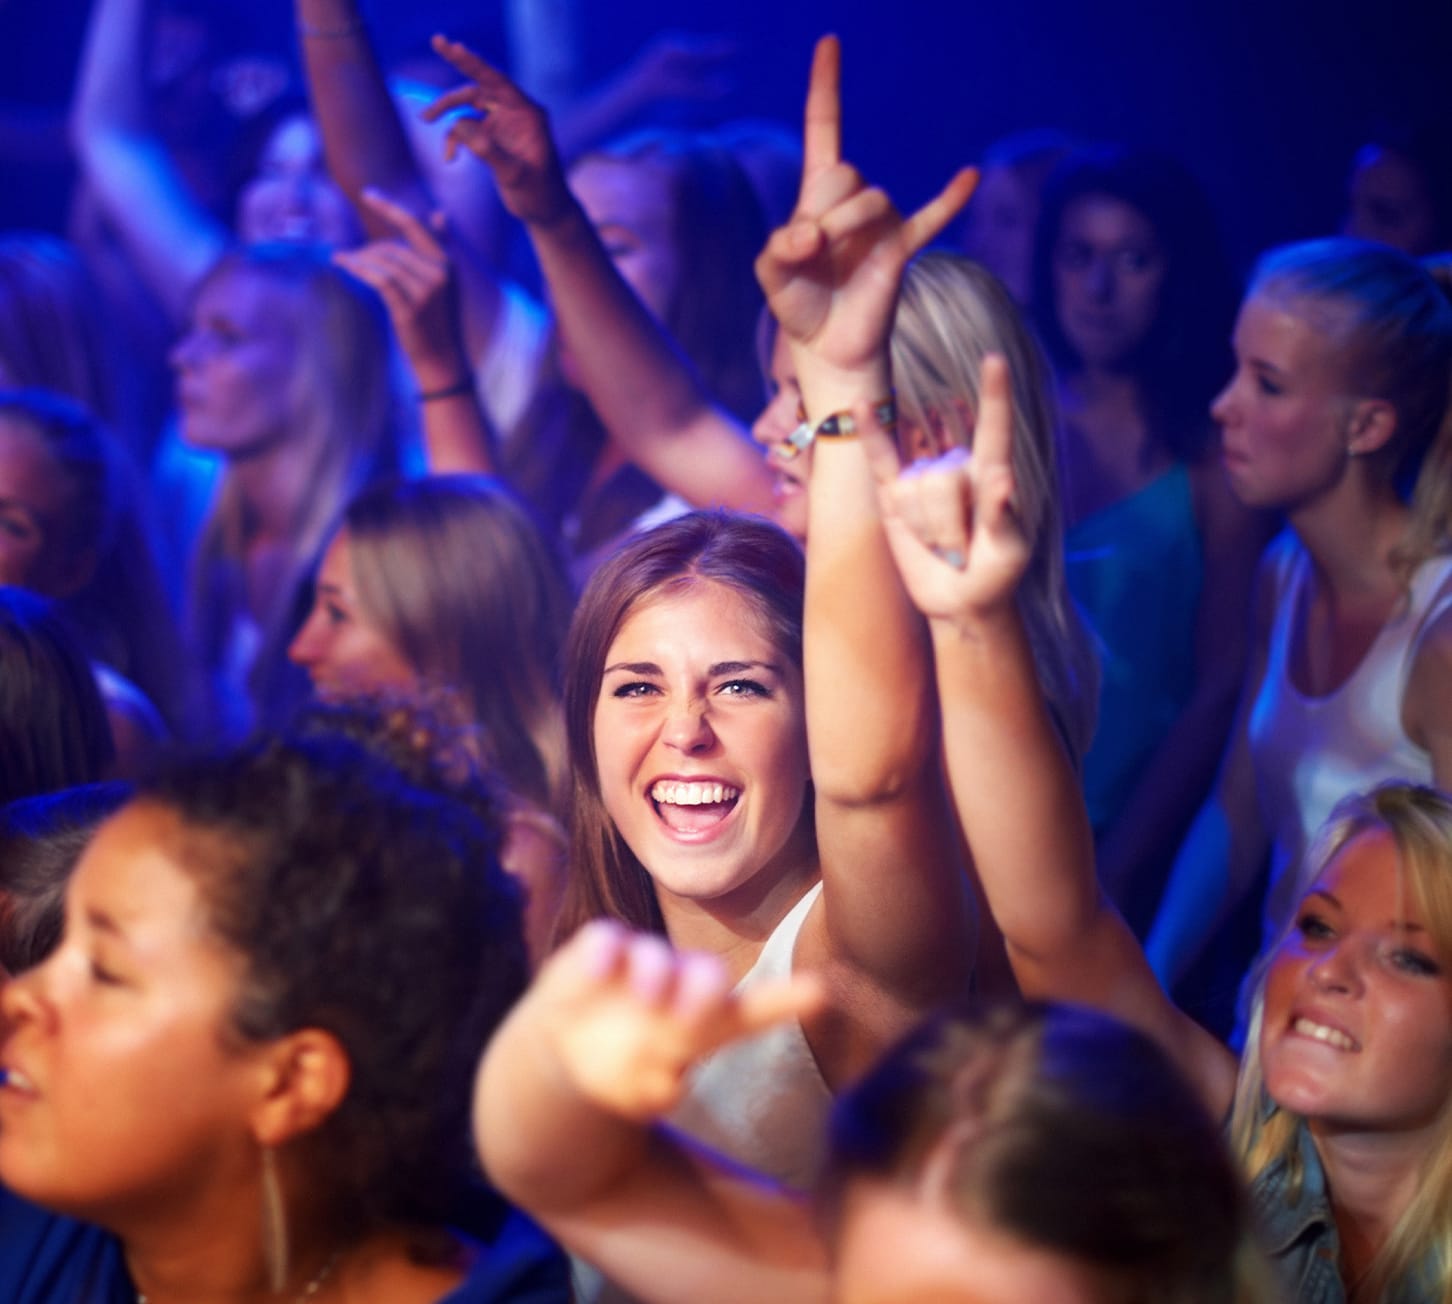 Woman in crowd enjoying music concert